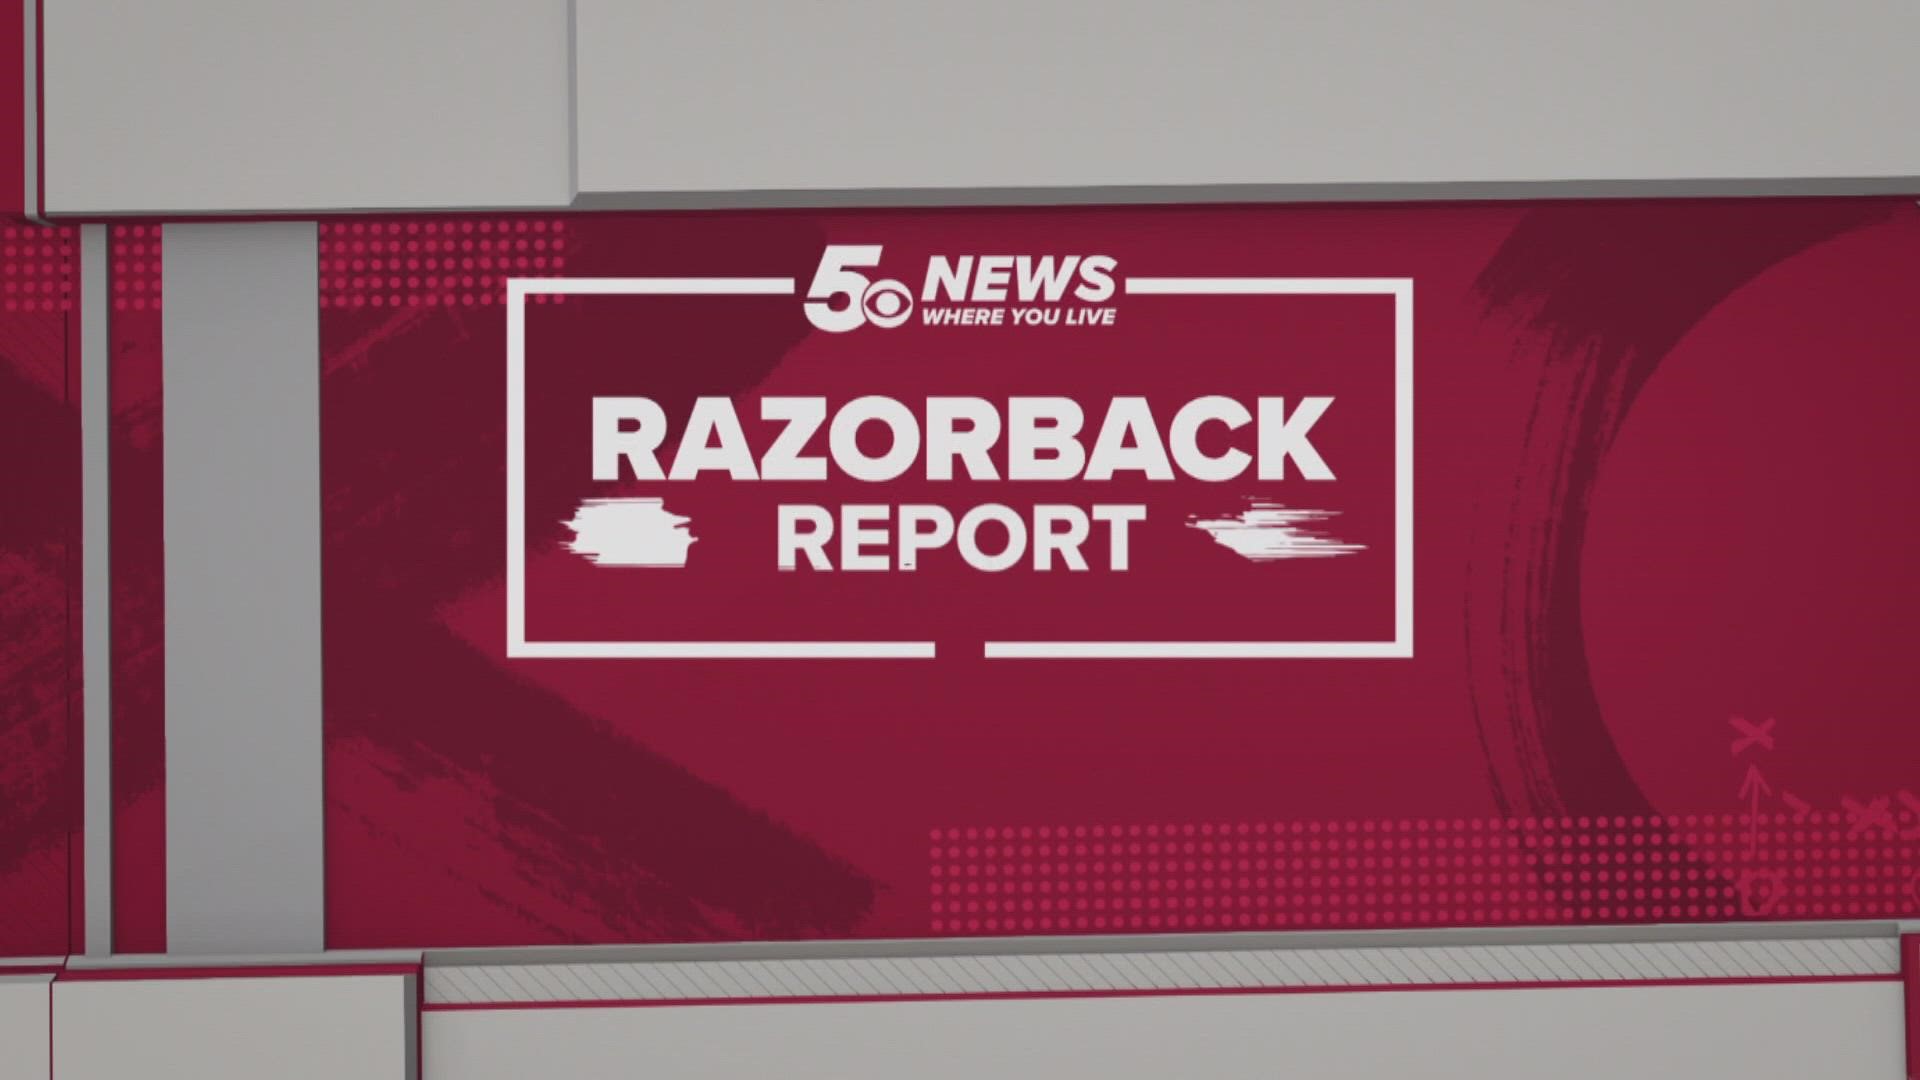 Sam Pittman details a hectic few weeks for the Razorback football program.